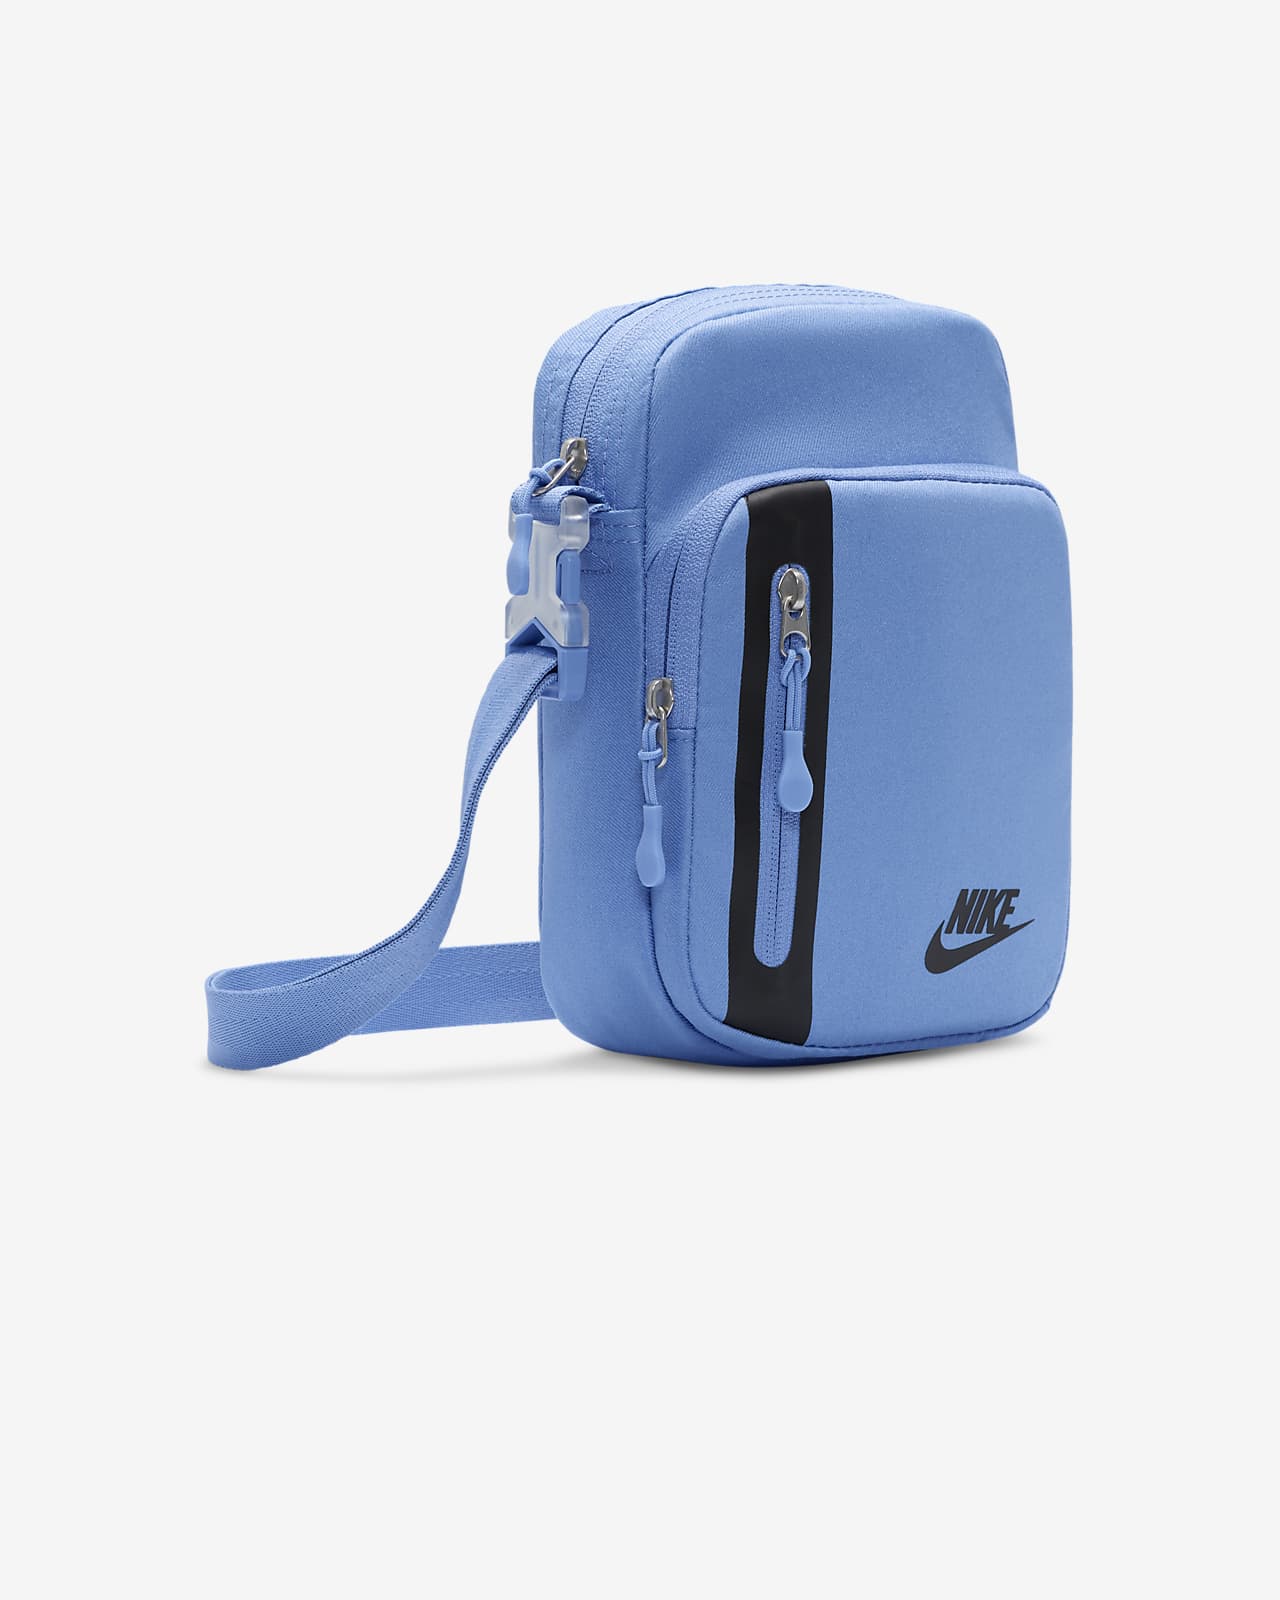 Nike Hoops Elite Team Black Duffel Gym Bag for Men and Women Review -  LightBagTravel.com | Mens gym bag, Womens backpack, Bags